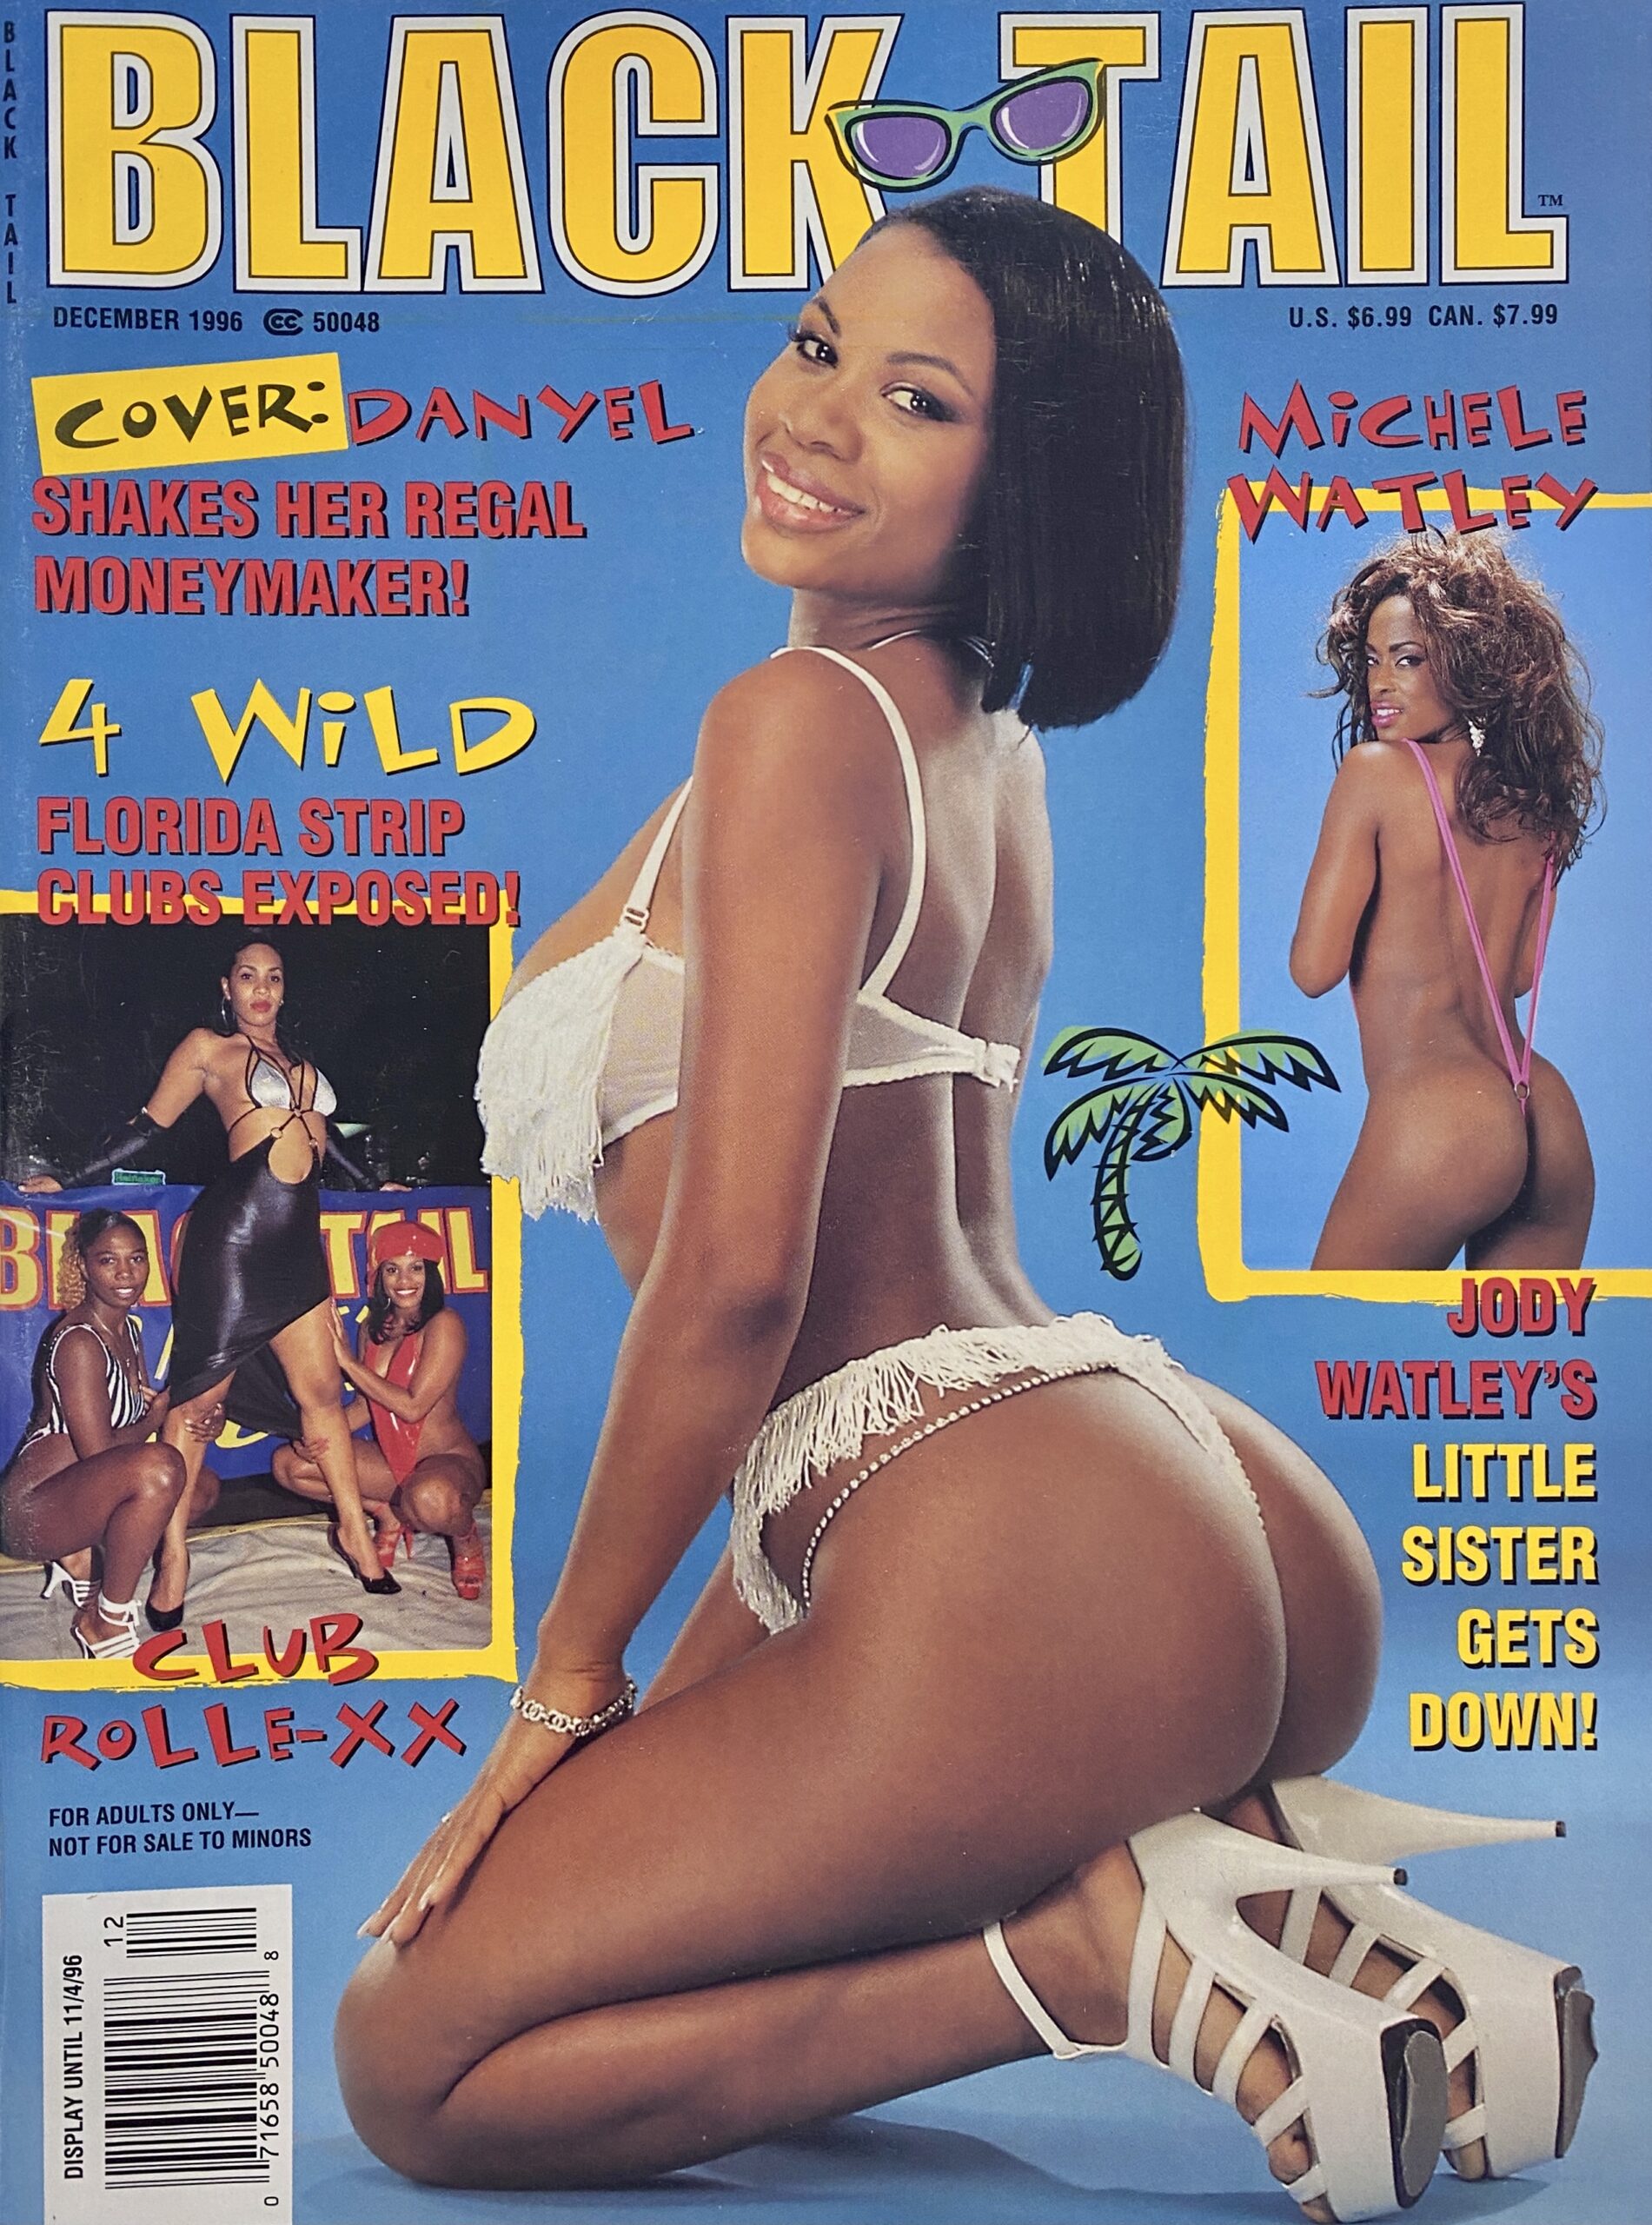 Black Porn Magazines - Black Tail December 1996 Adult Ebony Mens Magazine +++ - Vintage Magazines  16